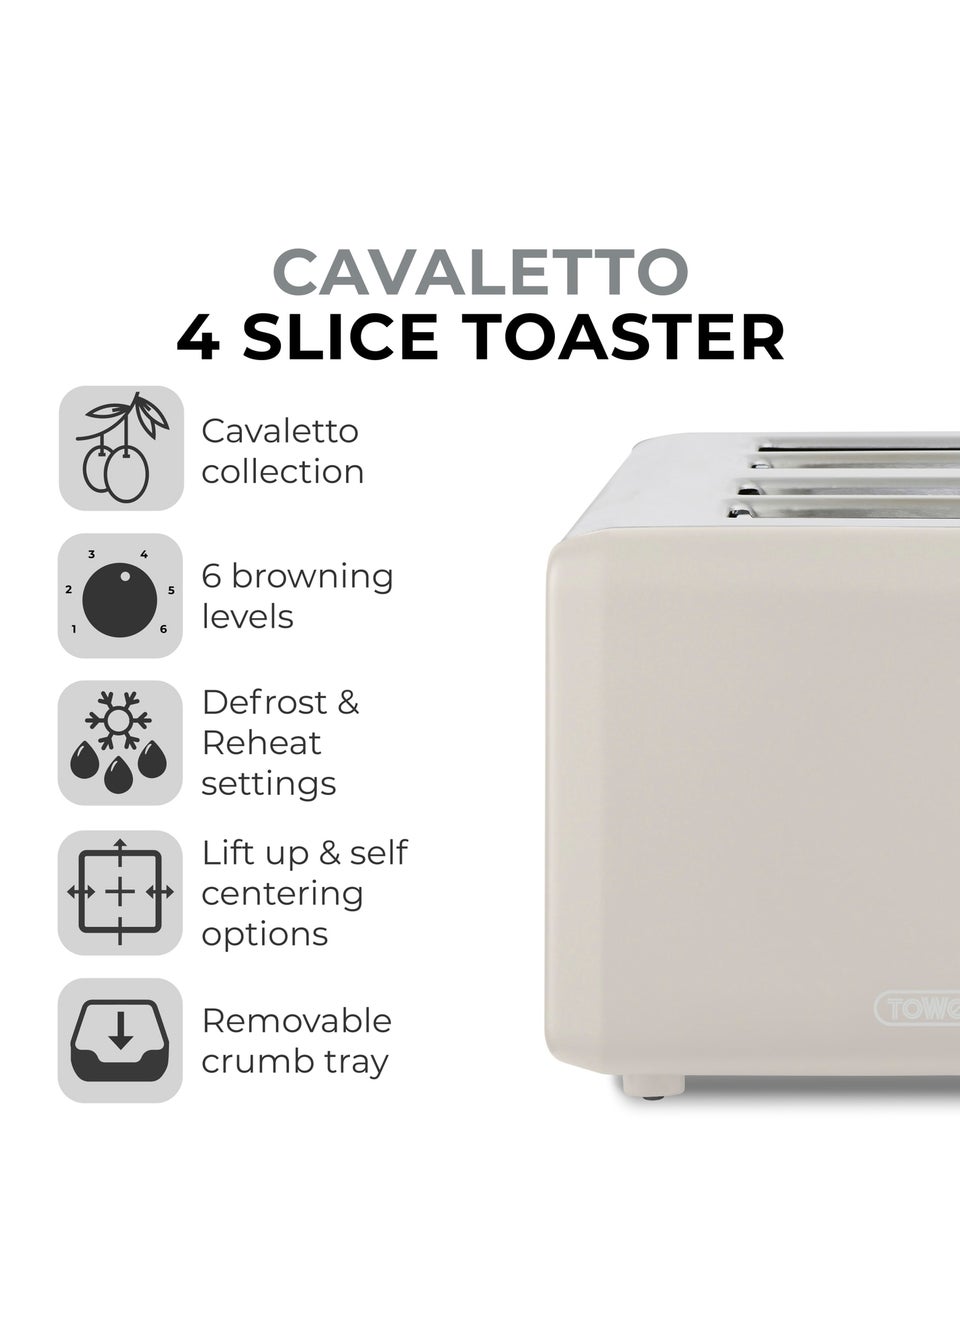 Tower Cavaletto 4 Slice Toaster